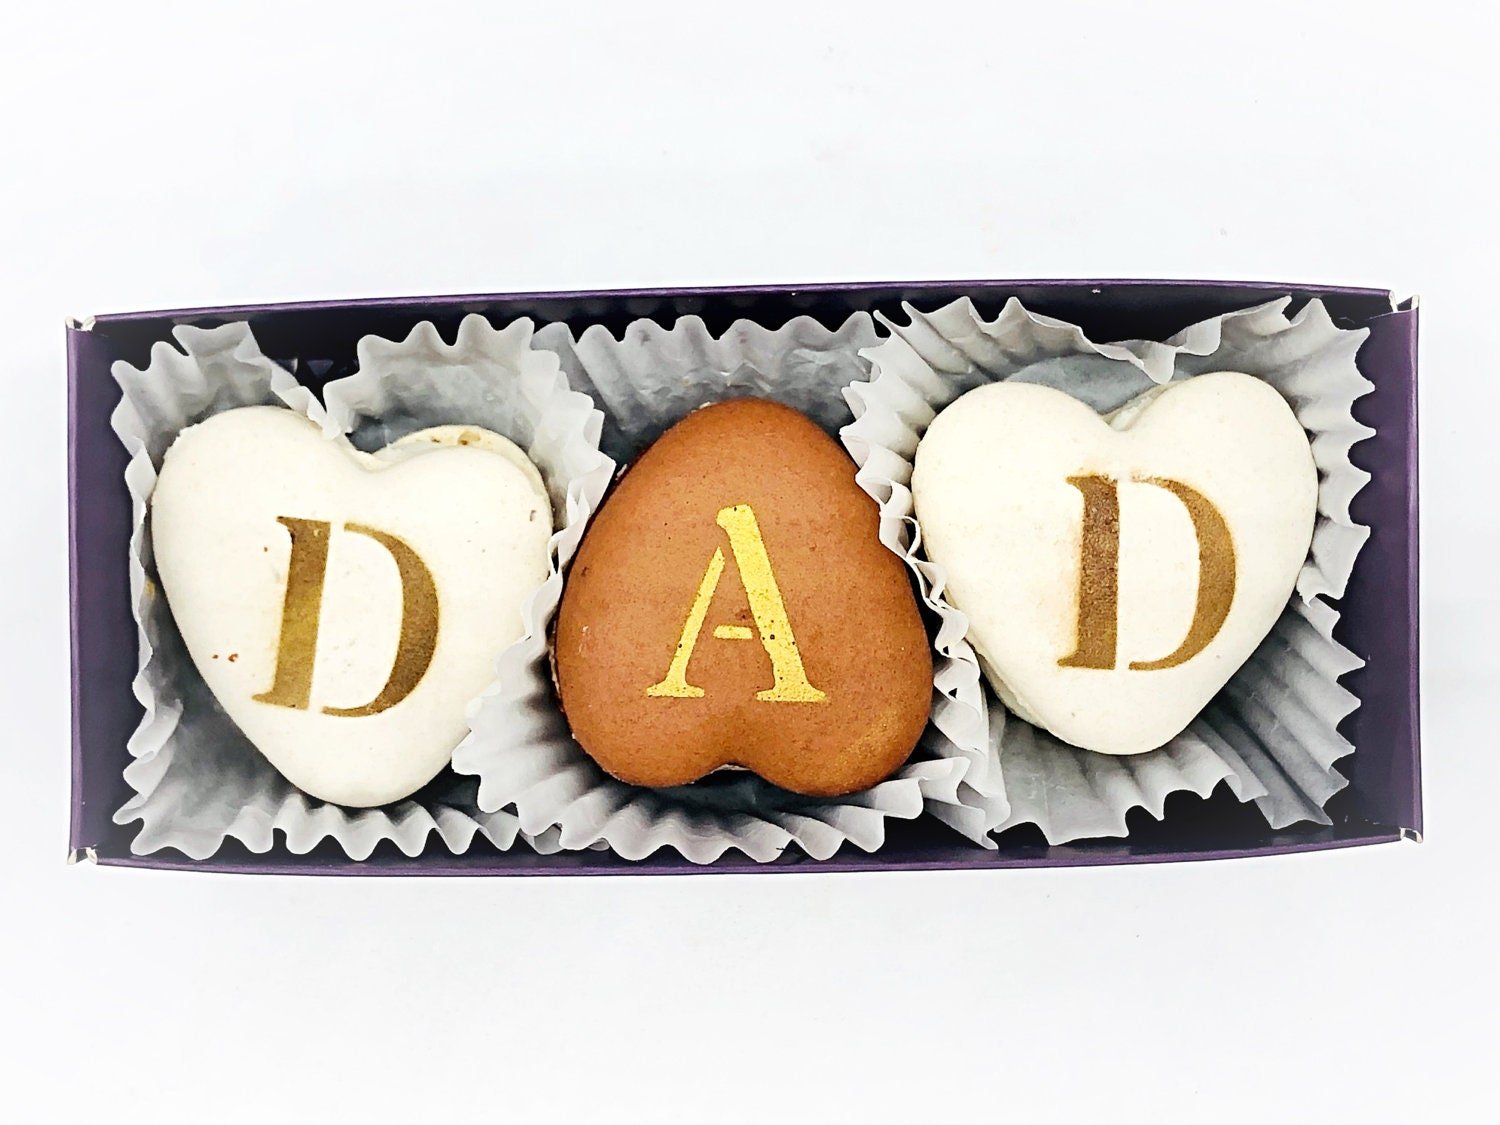 DAD Vegan Heart Macaron | Special gift for special dad! - Macaron CentraleStandard Shipping